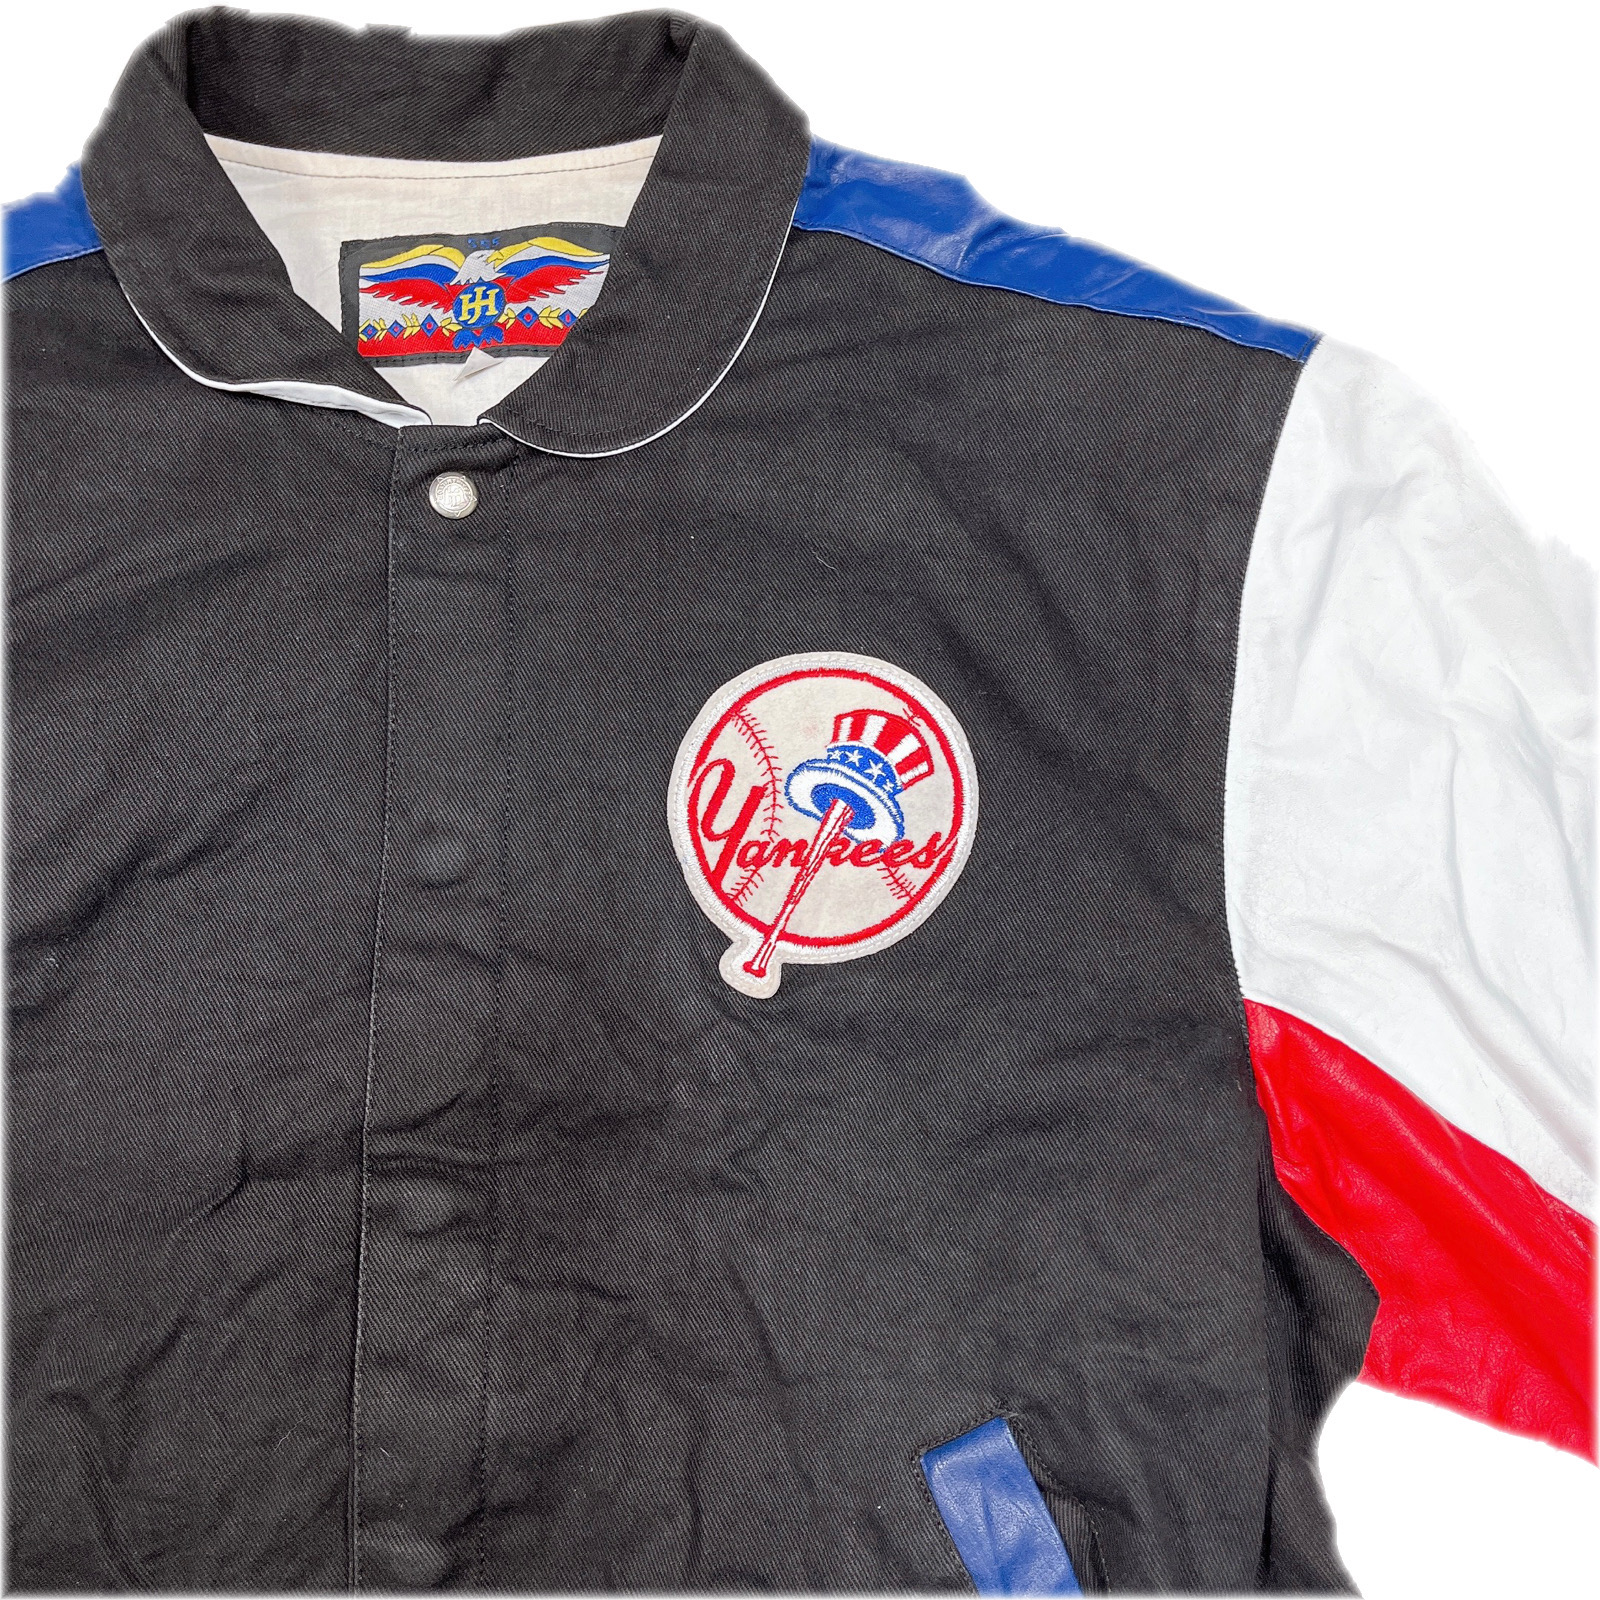 Lsize MLB New York Yankees leather jack素材本革